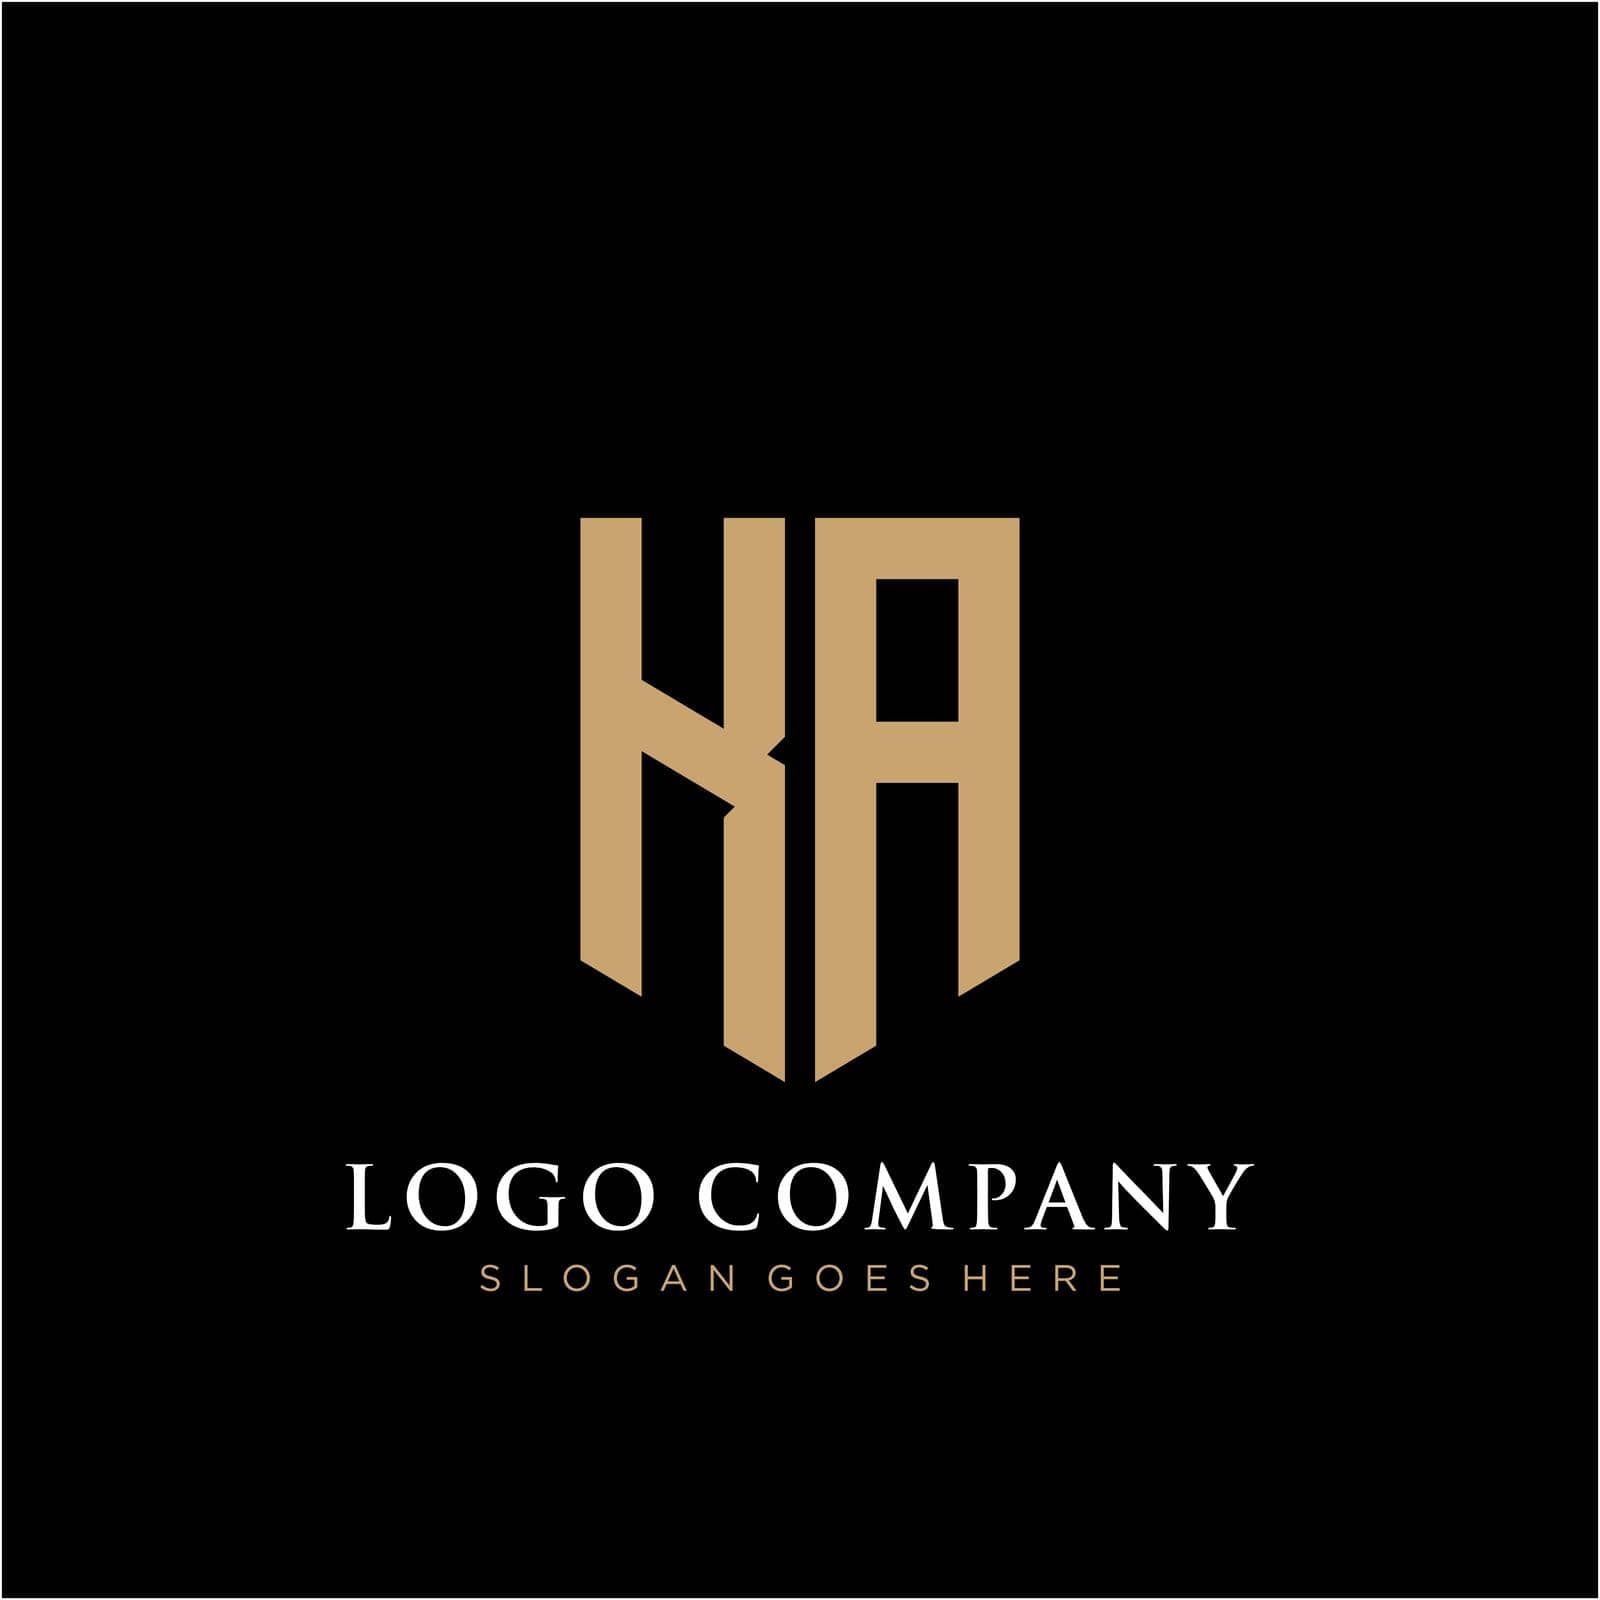 KA Letter logo icon design template elements by liaanniesatul